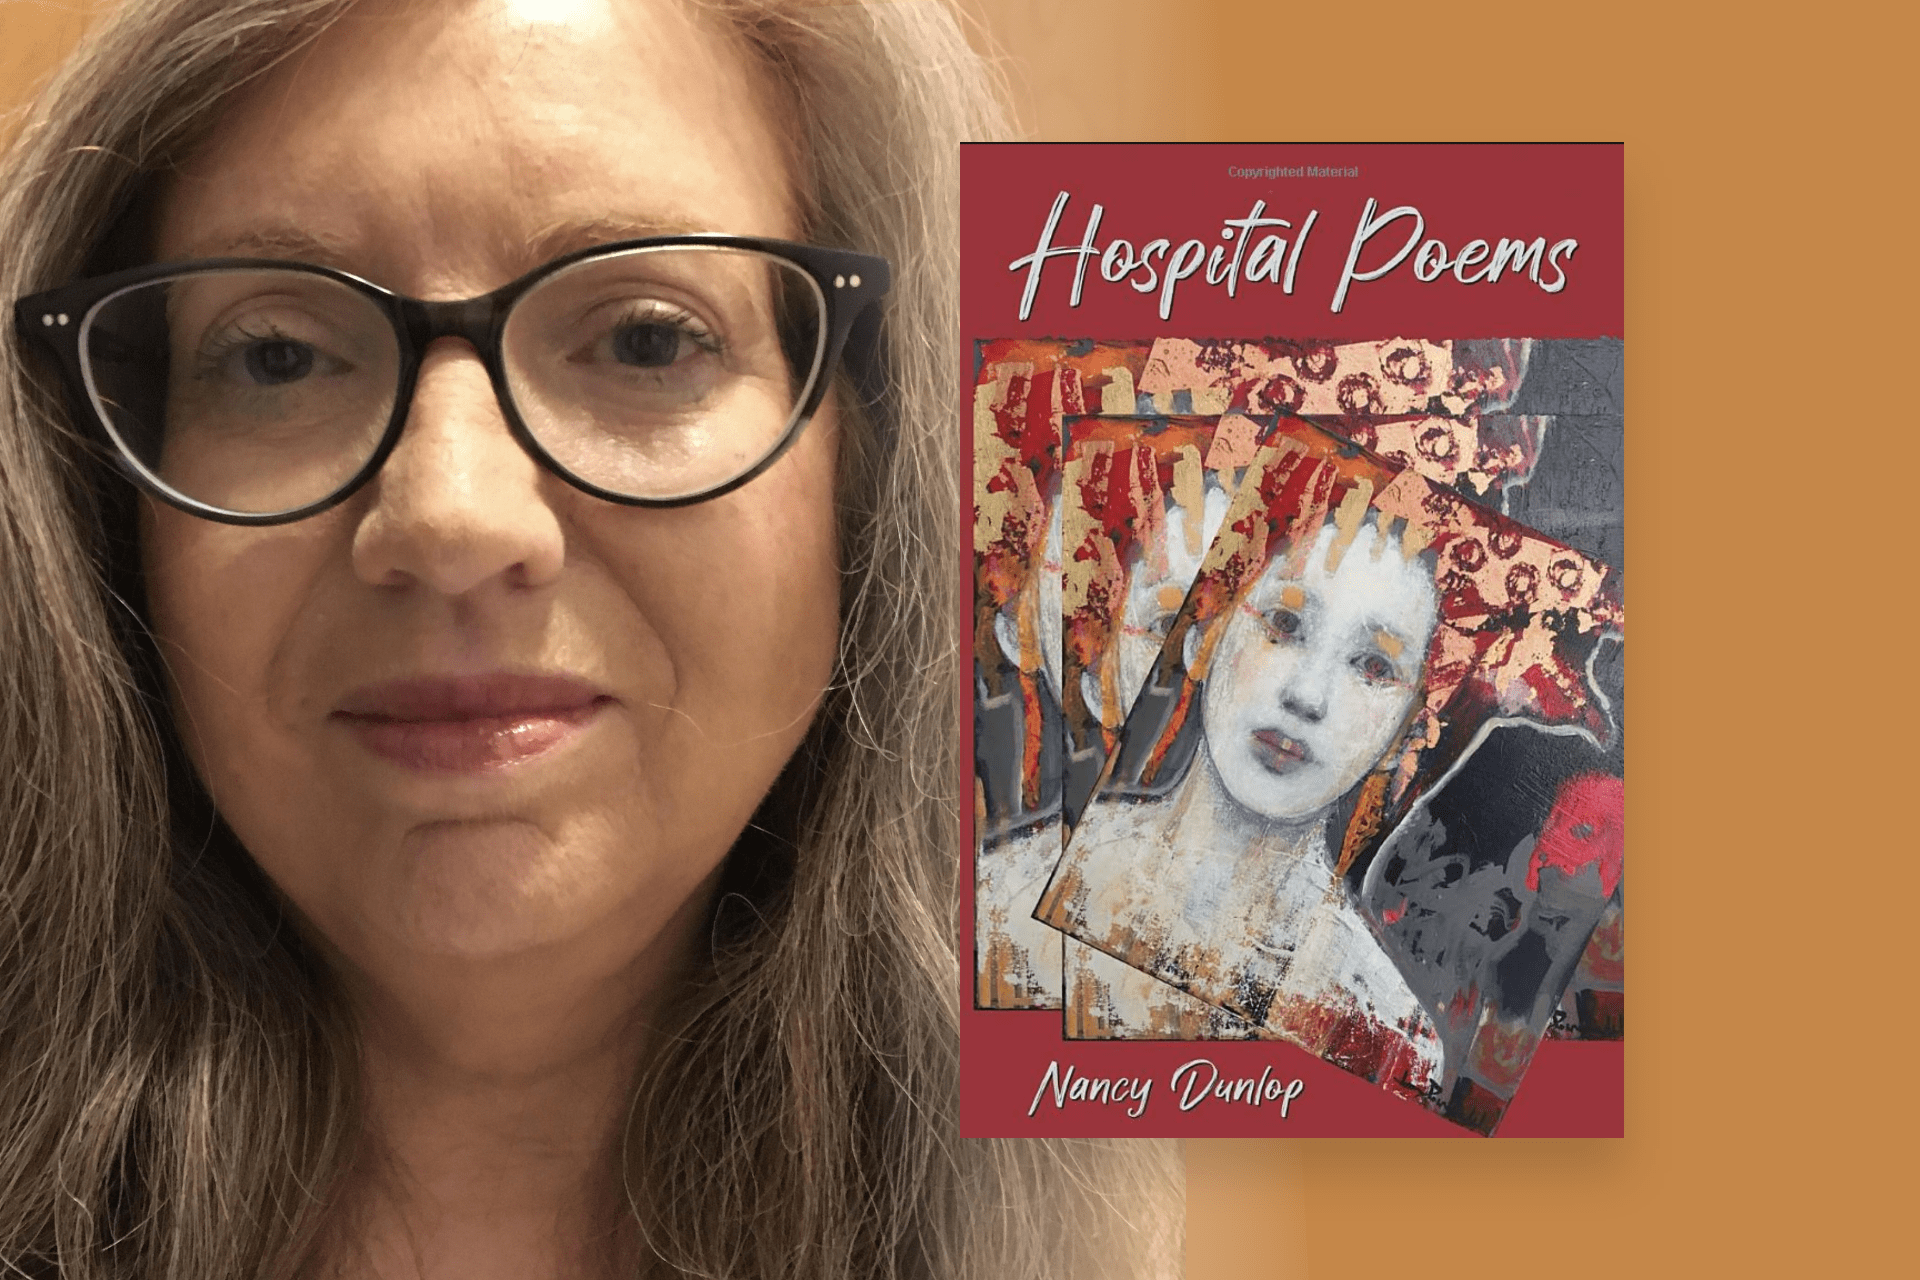 Hospital Poems by Nancy Dunlop